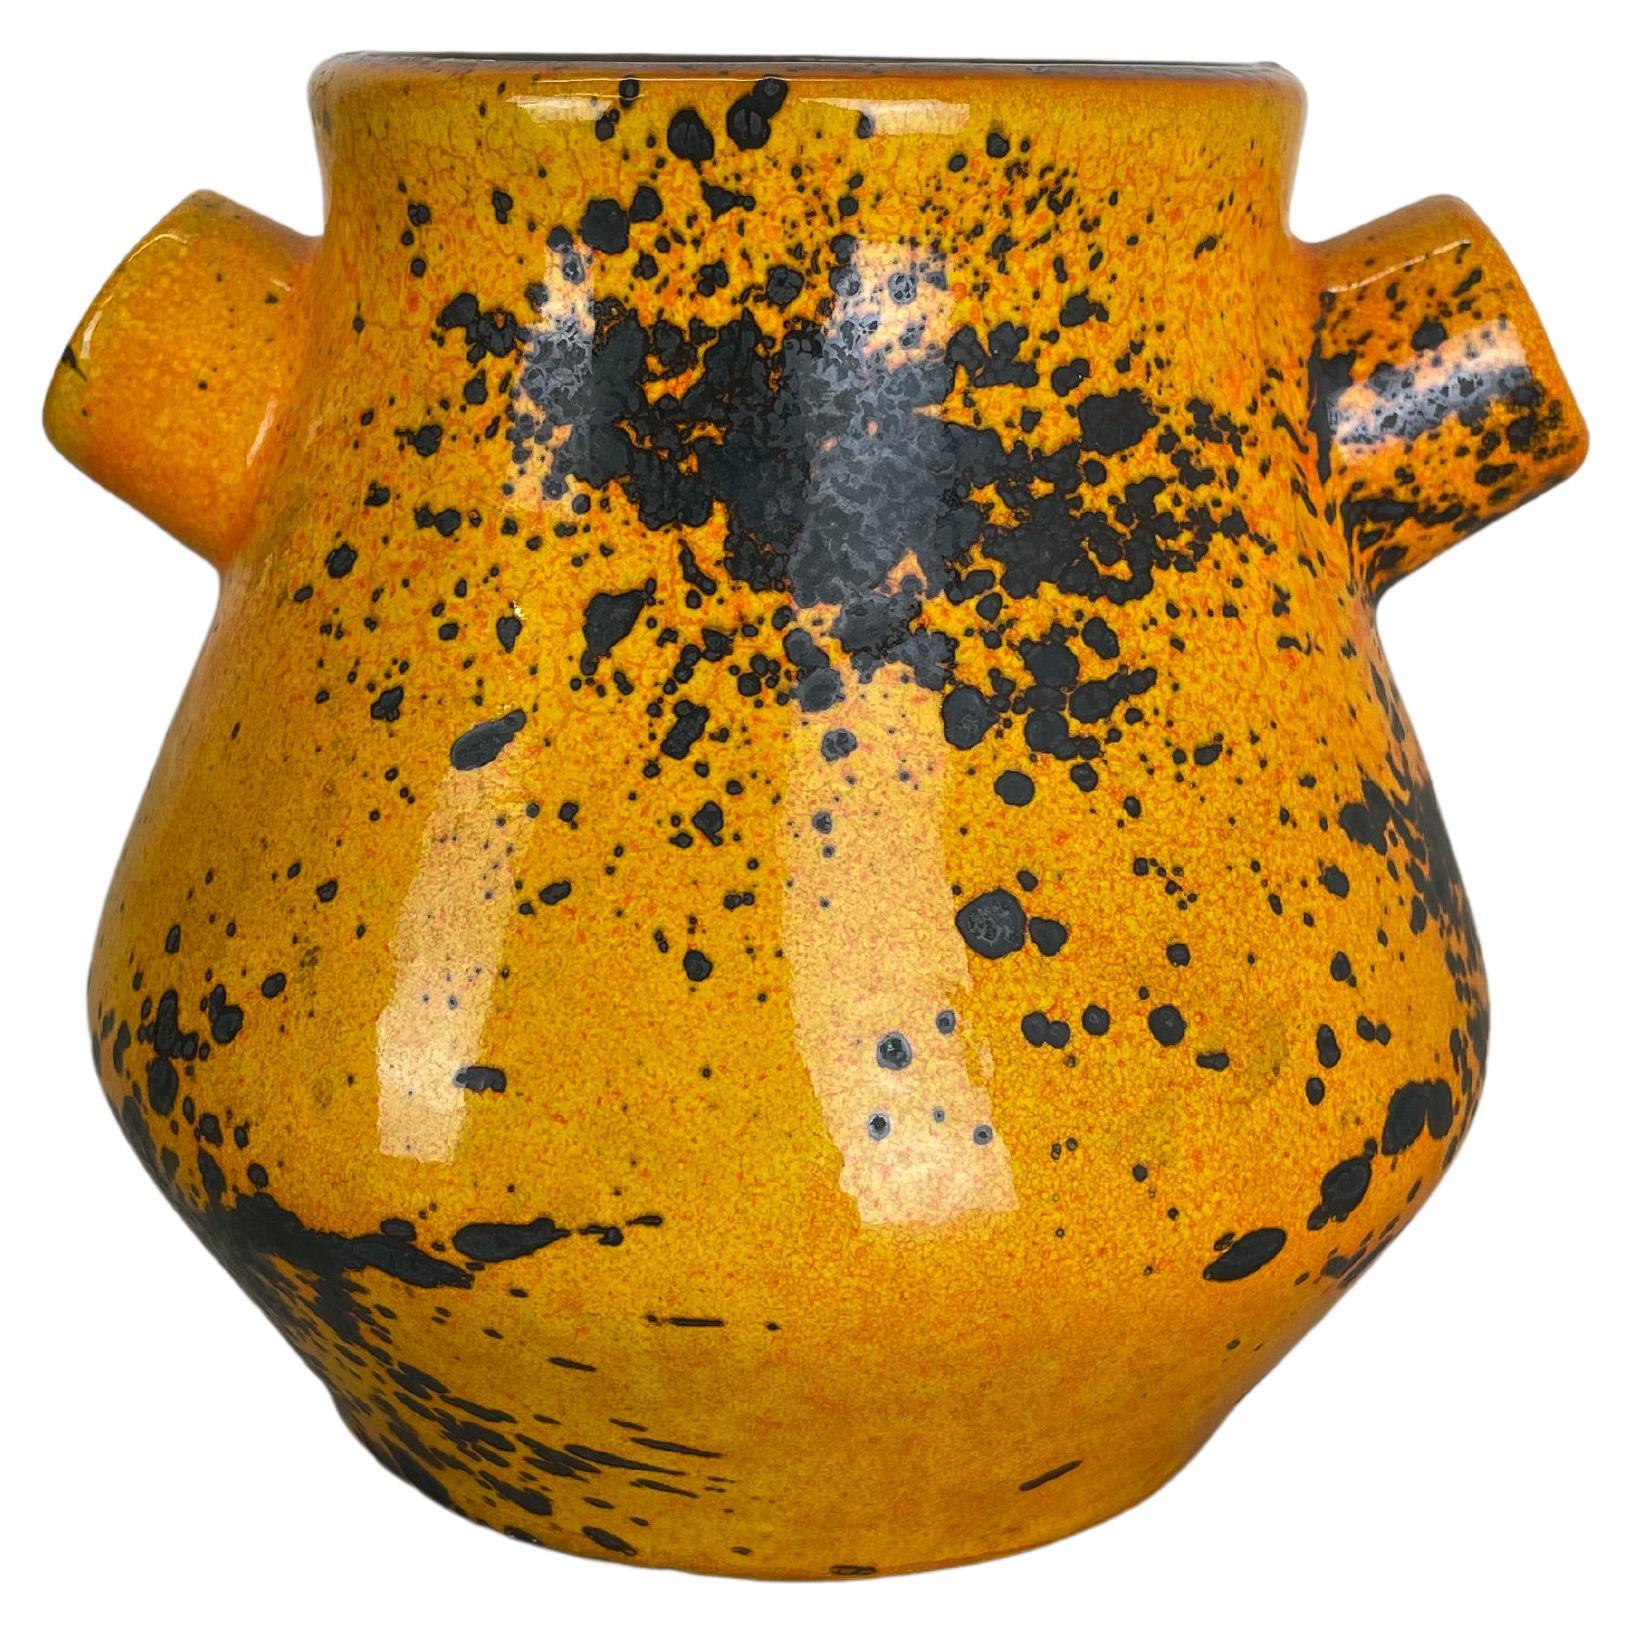 Original Orange Ceramic Studio Pottery Vase by Marei Ceramics, Germany 1970s For Sale